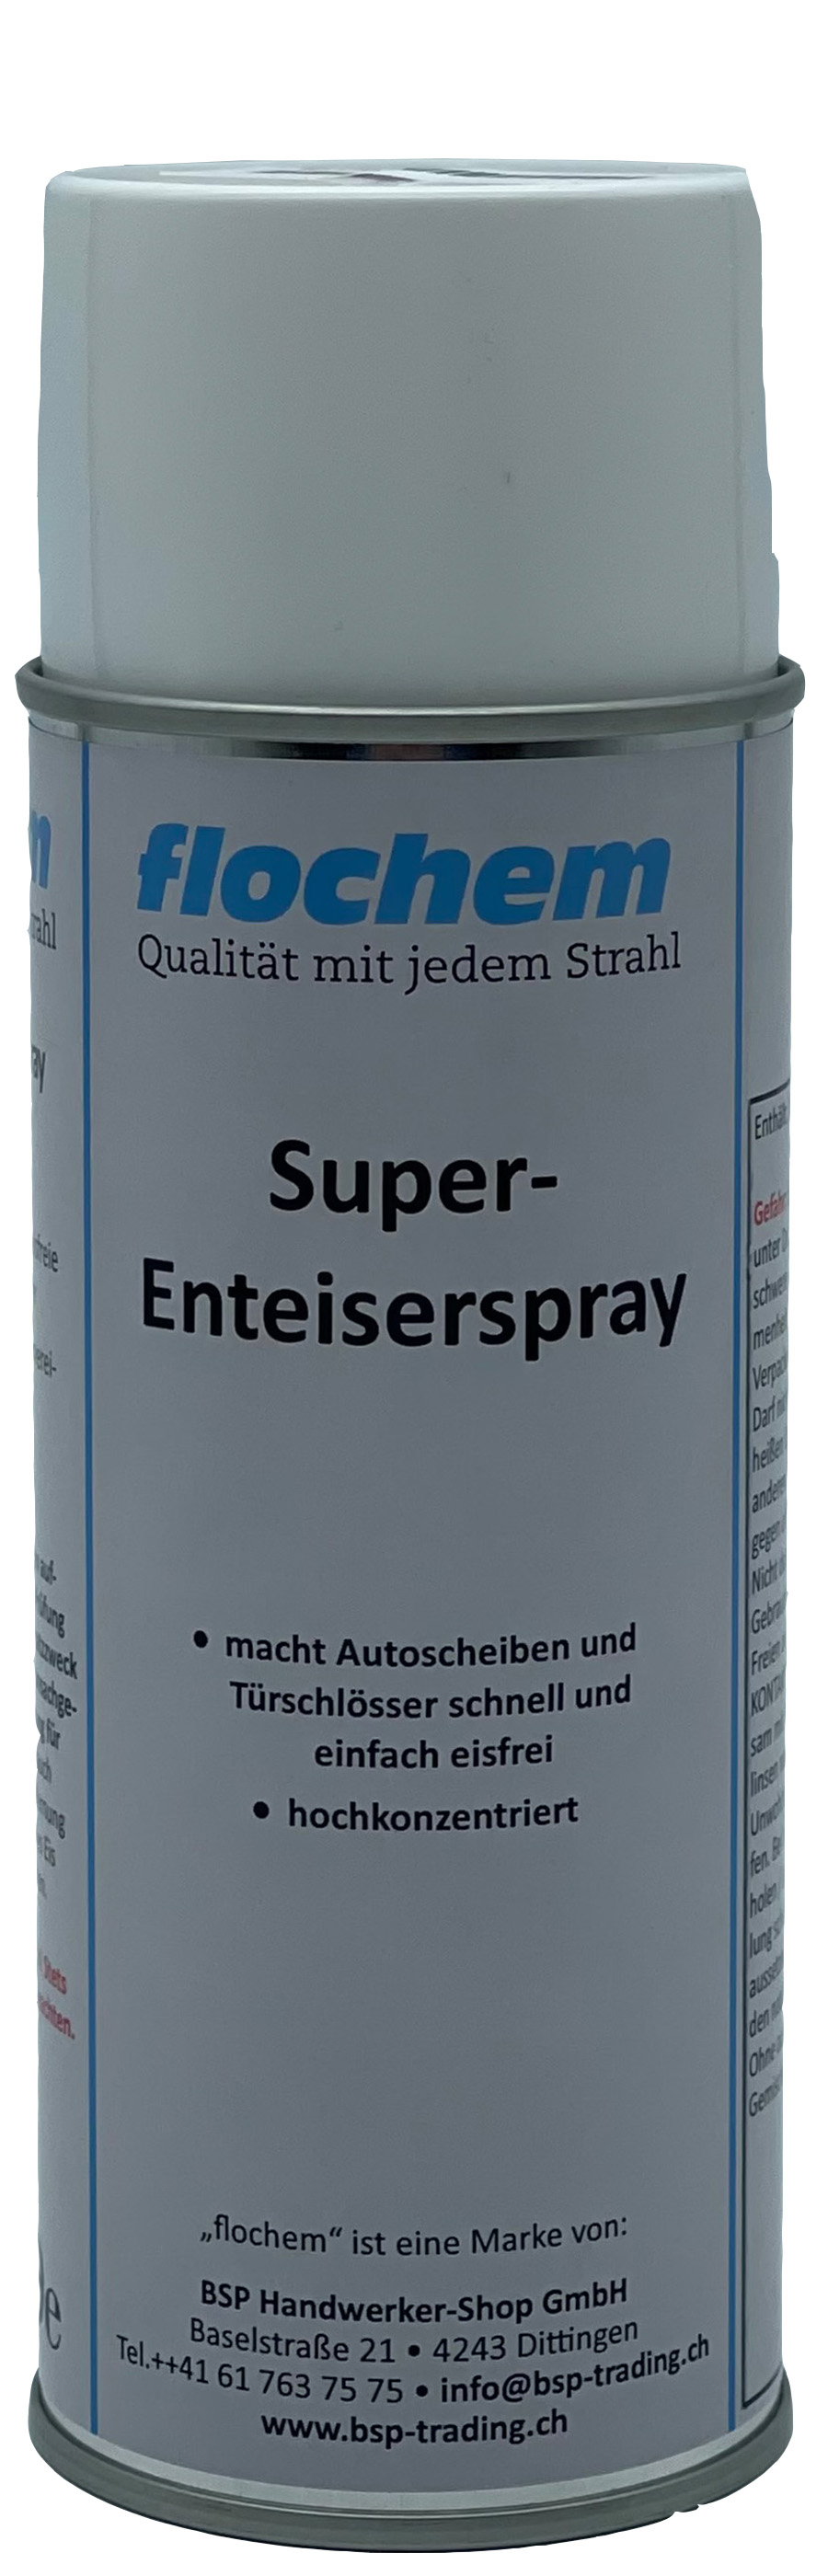 Super-Enteiserspray 400ml